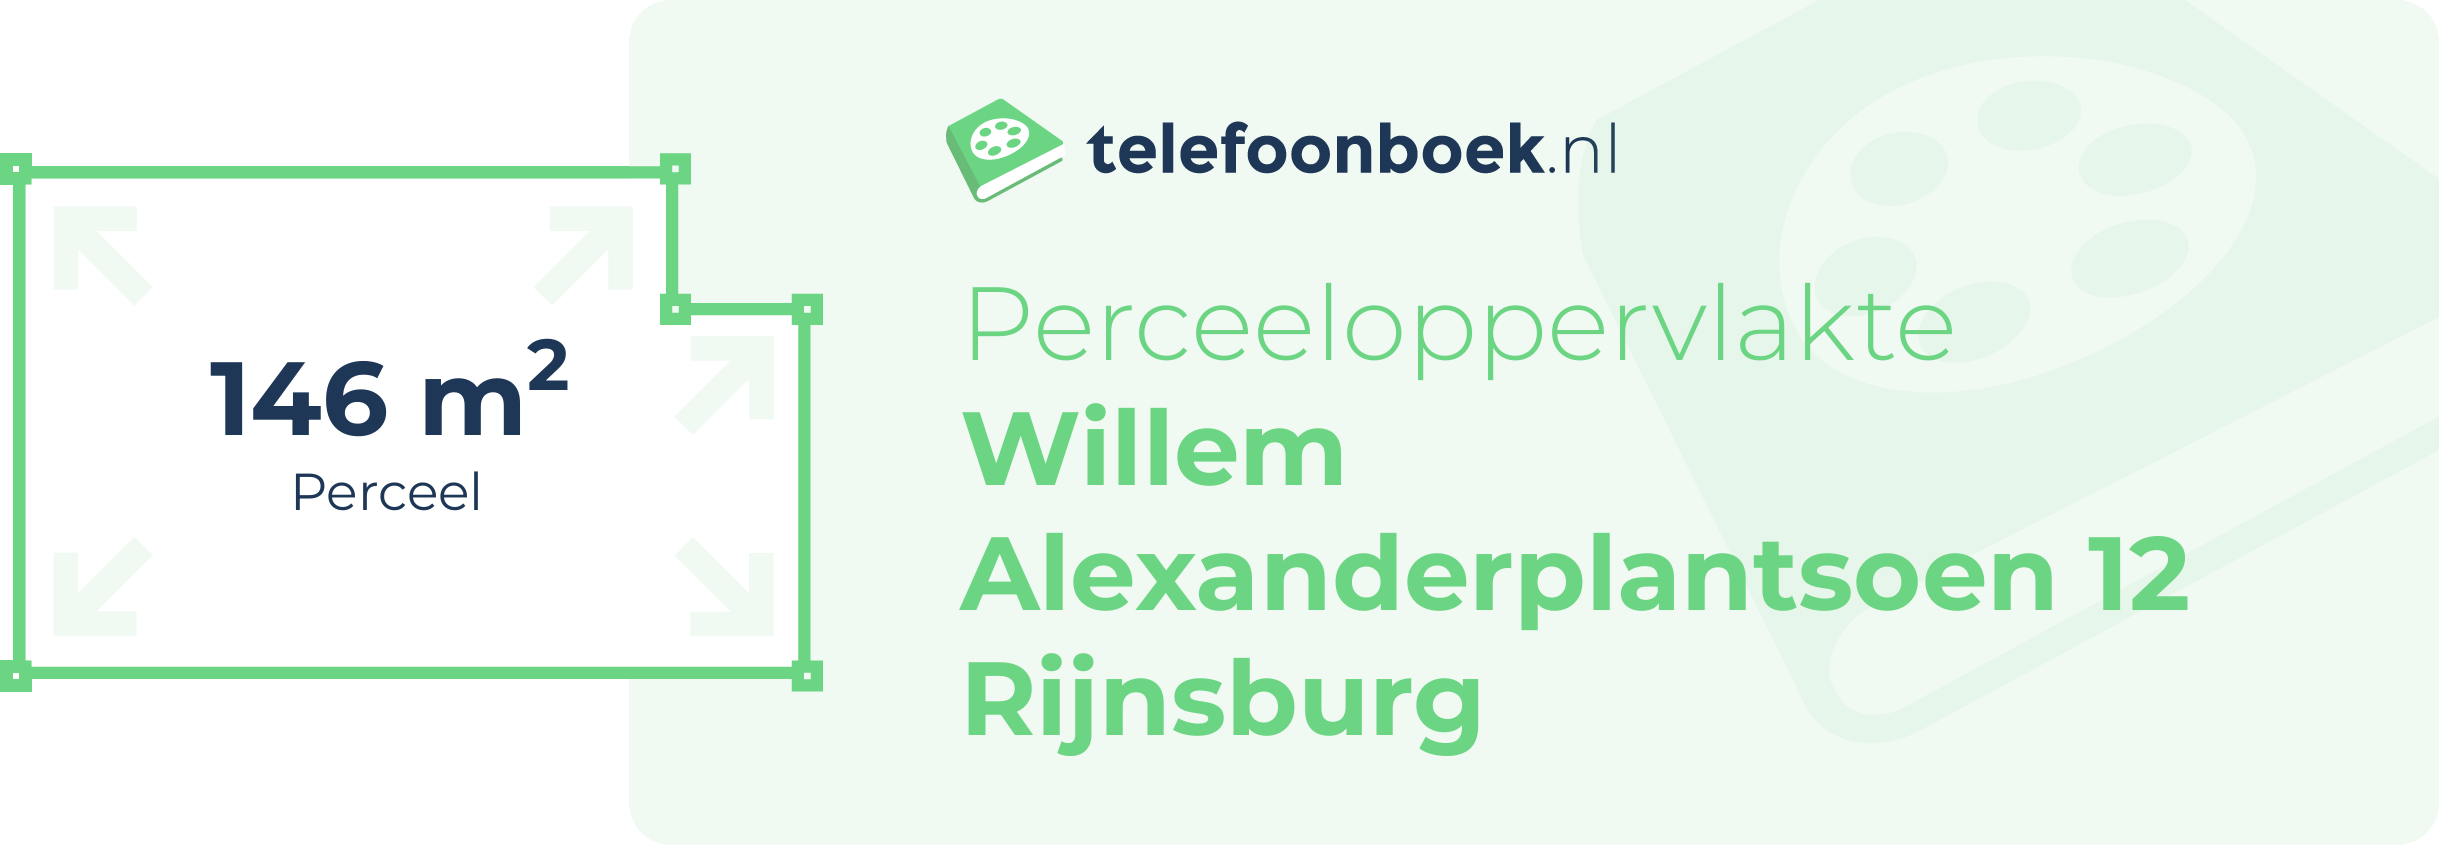 Perceeloppervlakte Willem Alexanderplantsoen 12 Rijnsburg